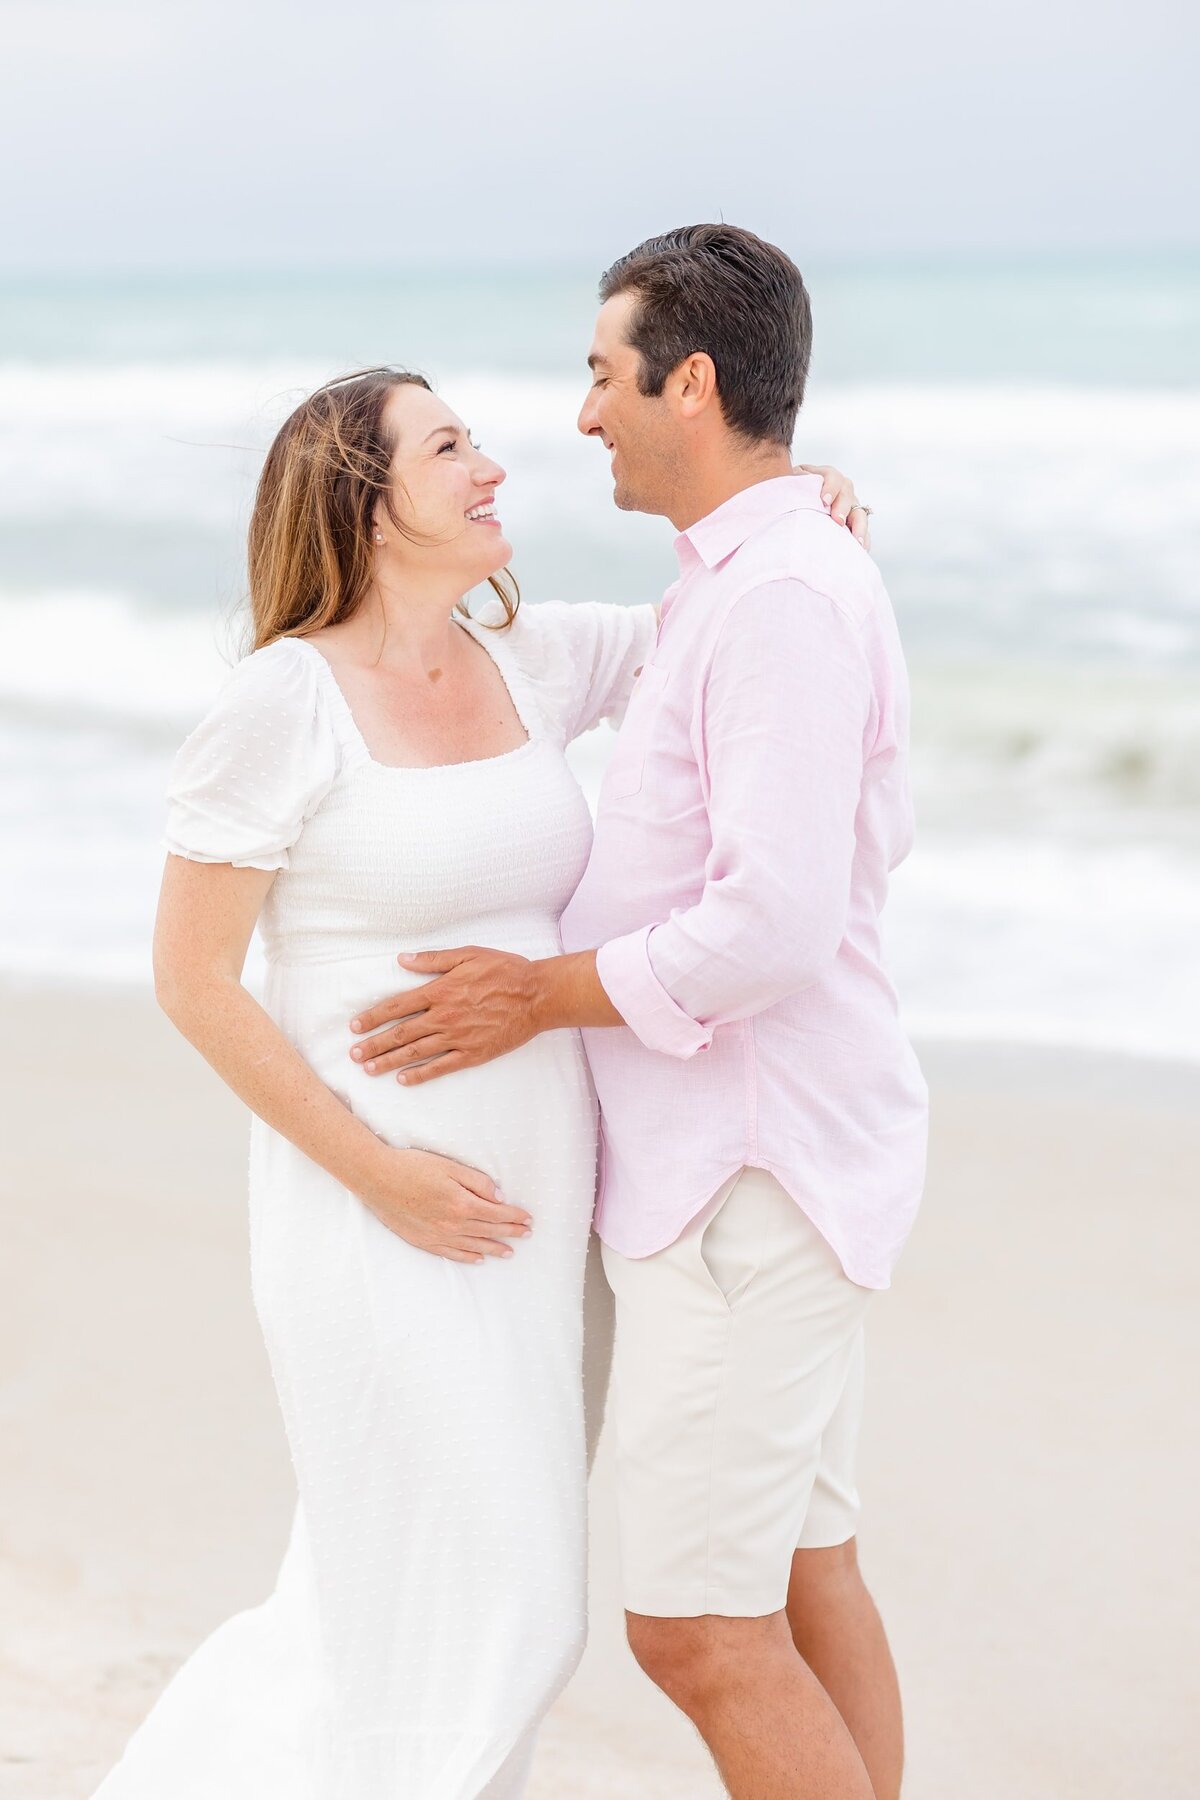 Pregnant couple enjoying the beach